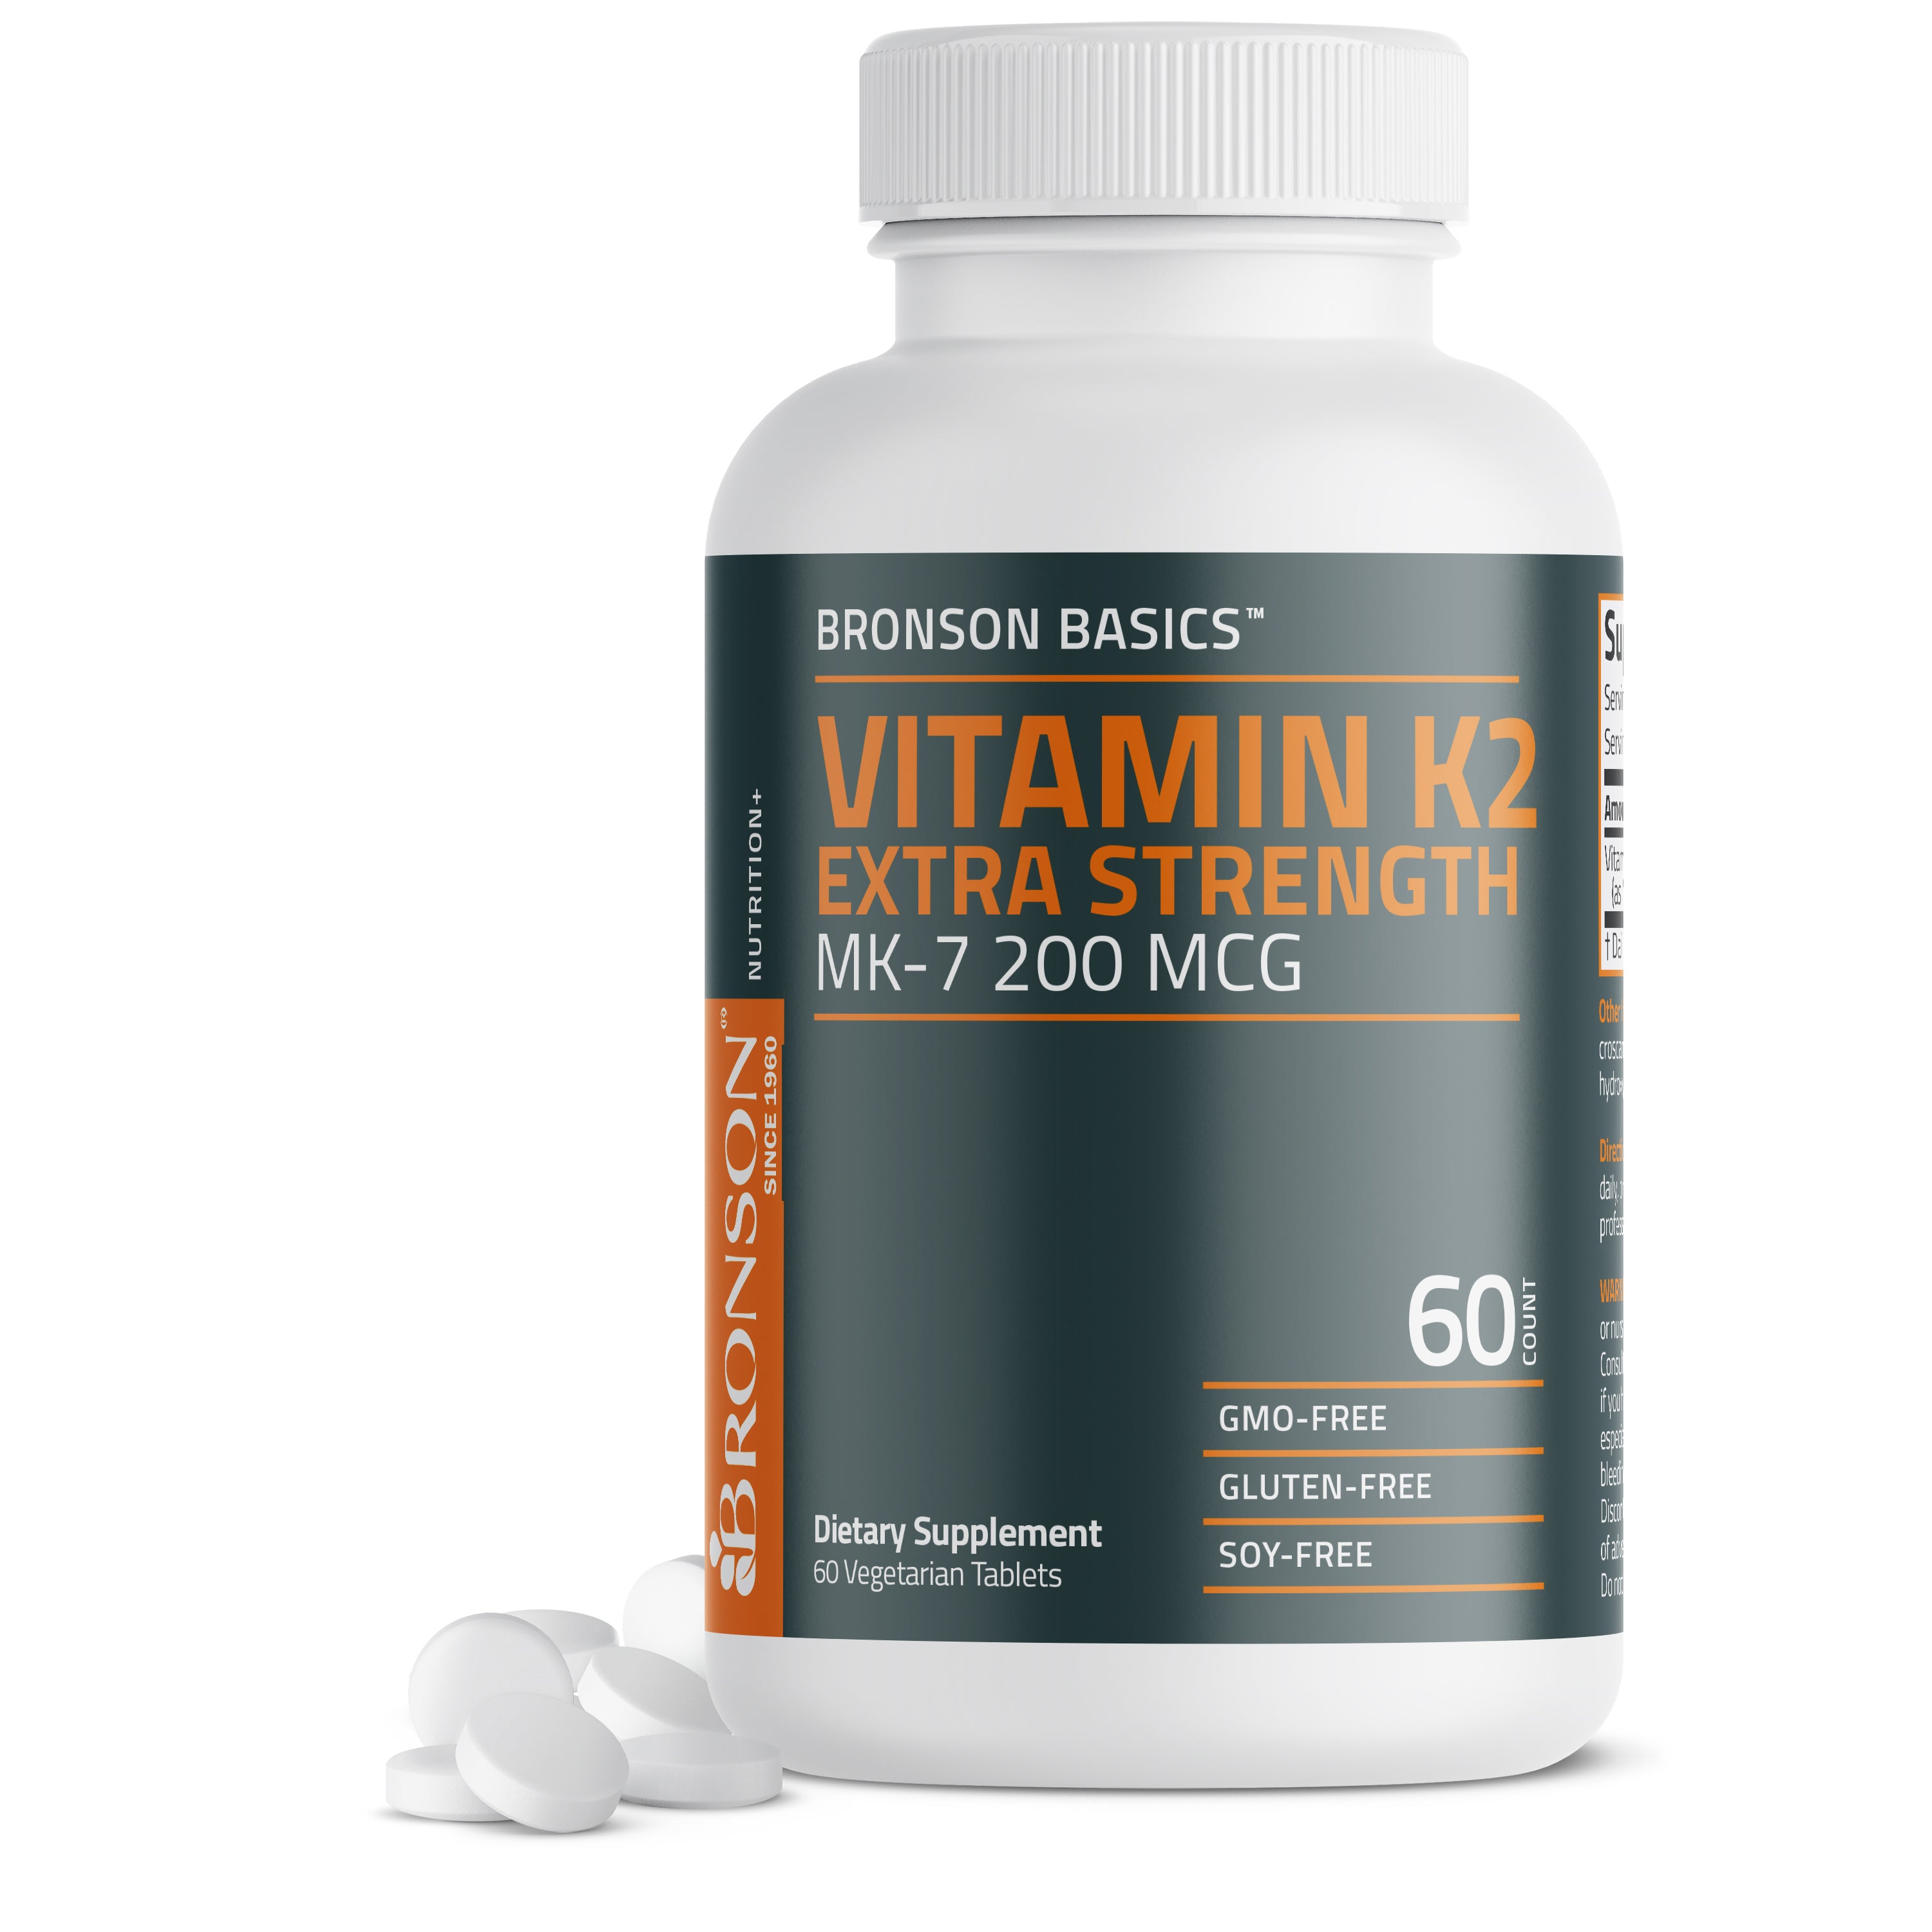 Vitamin K2 Extra Strength MK-7 200 MCG view 1 of 6